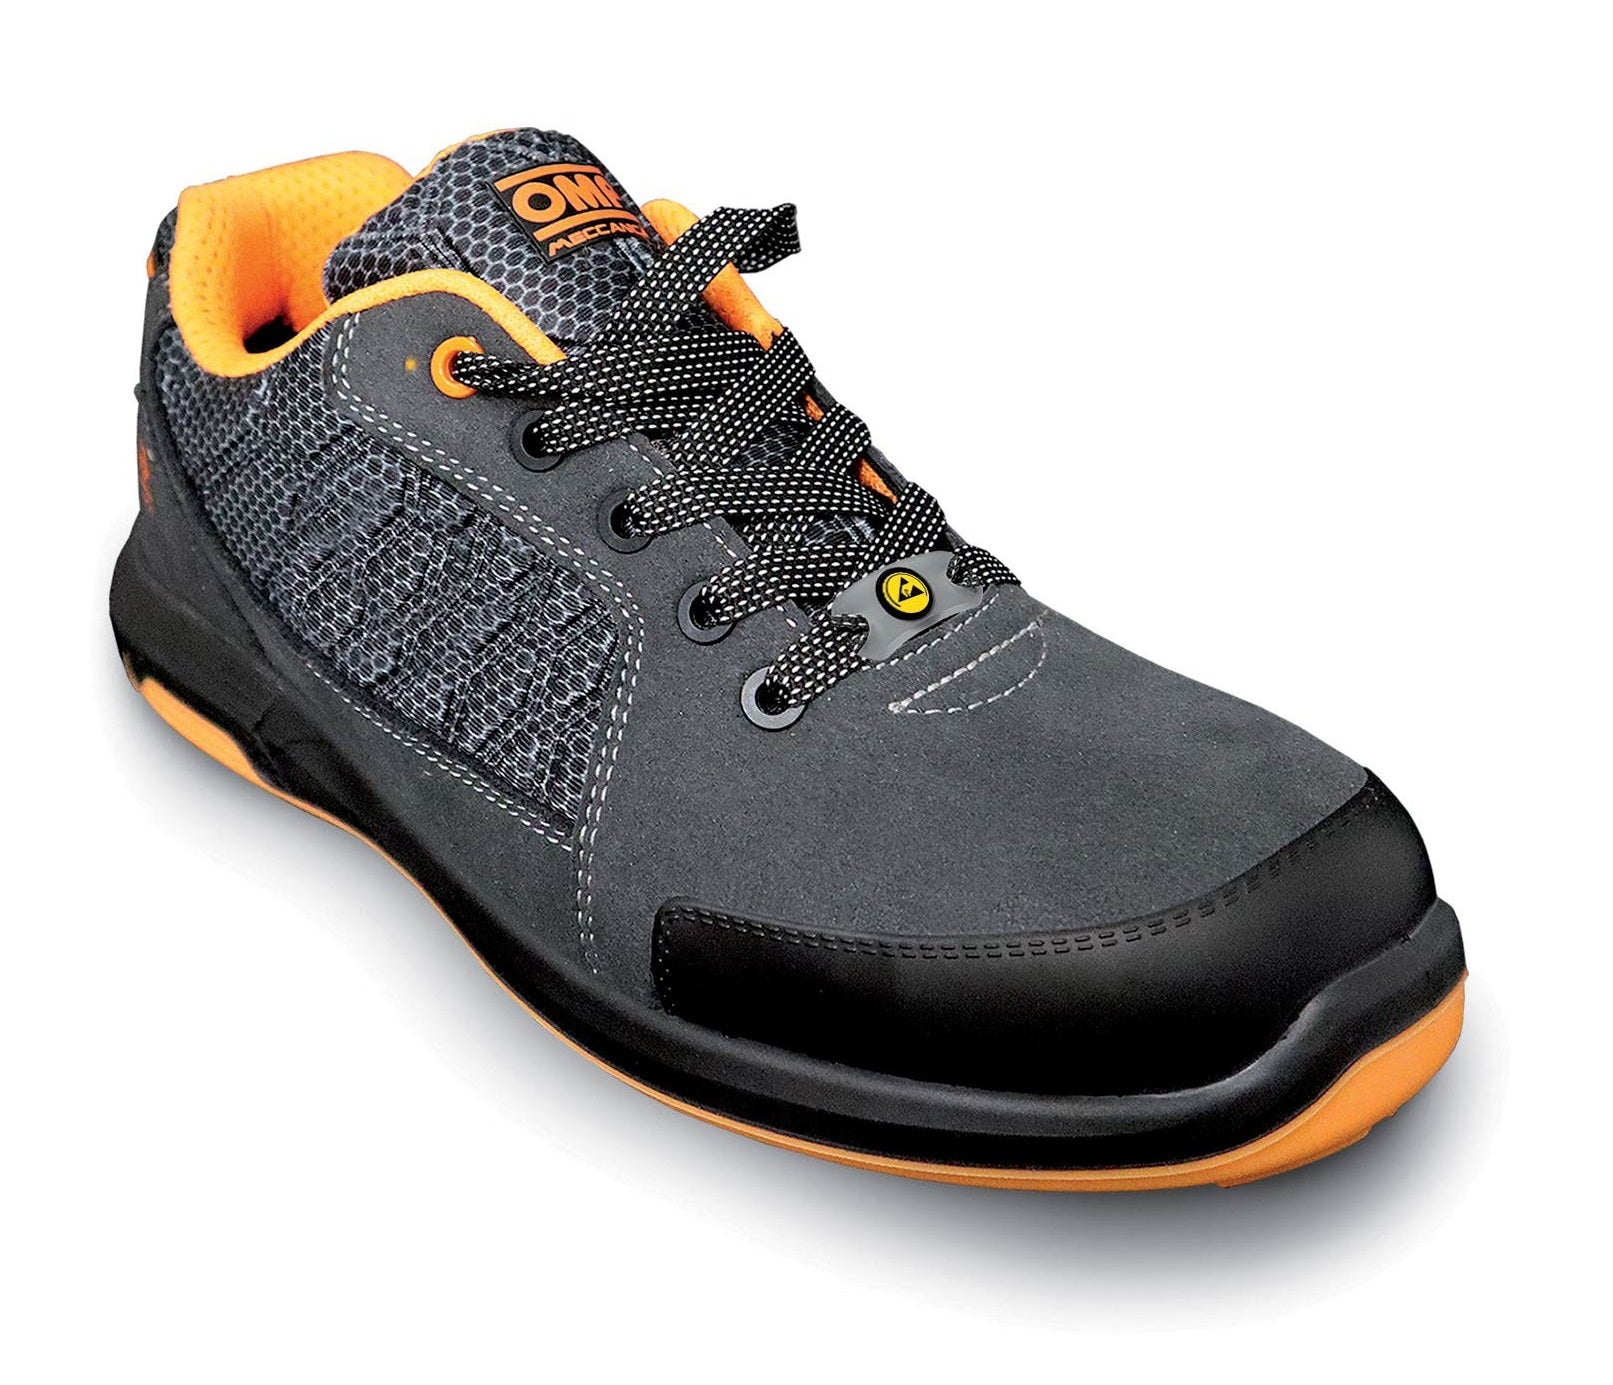 OMP OMPS90014620 Pro Sport Safety Mechanic's shoes, black/orange, size 46 Photo-0 